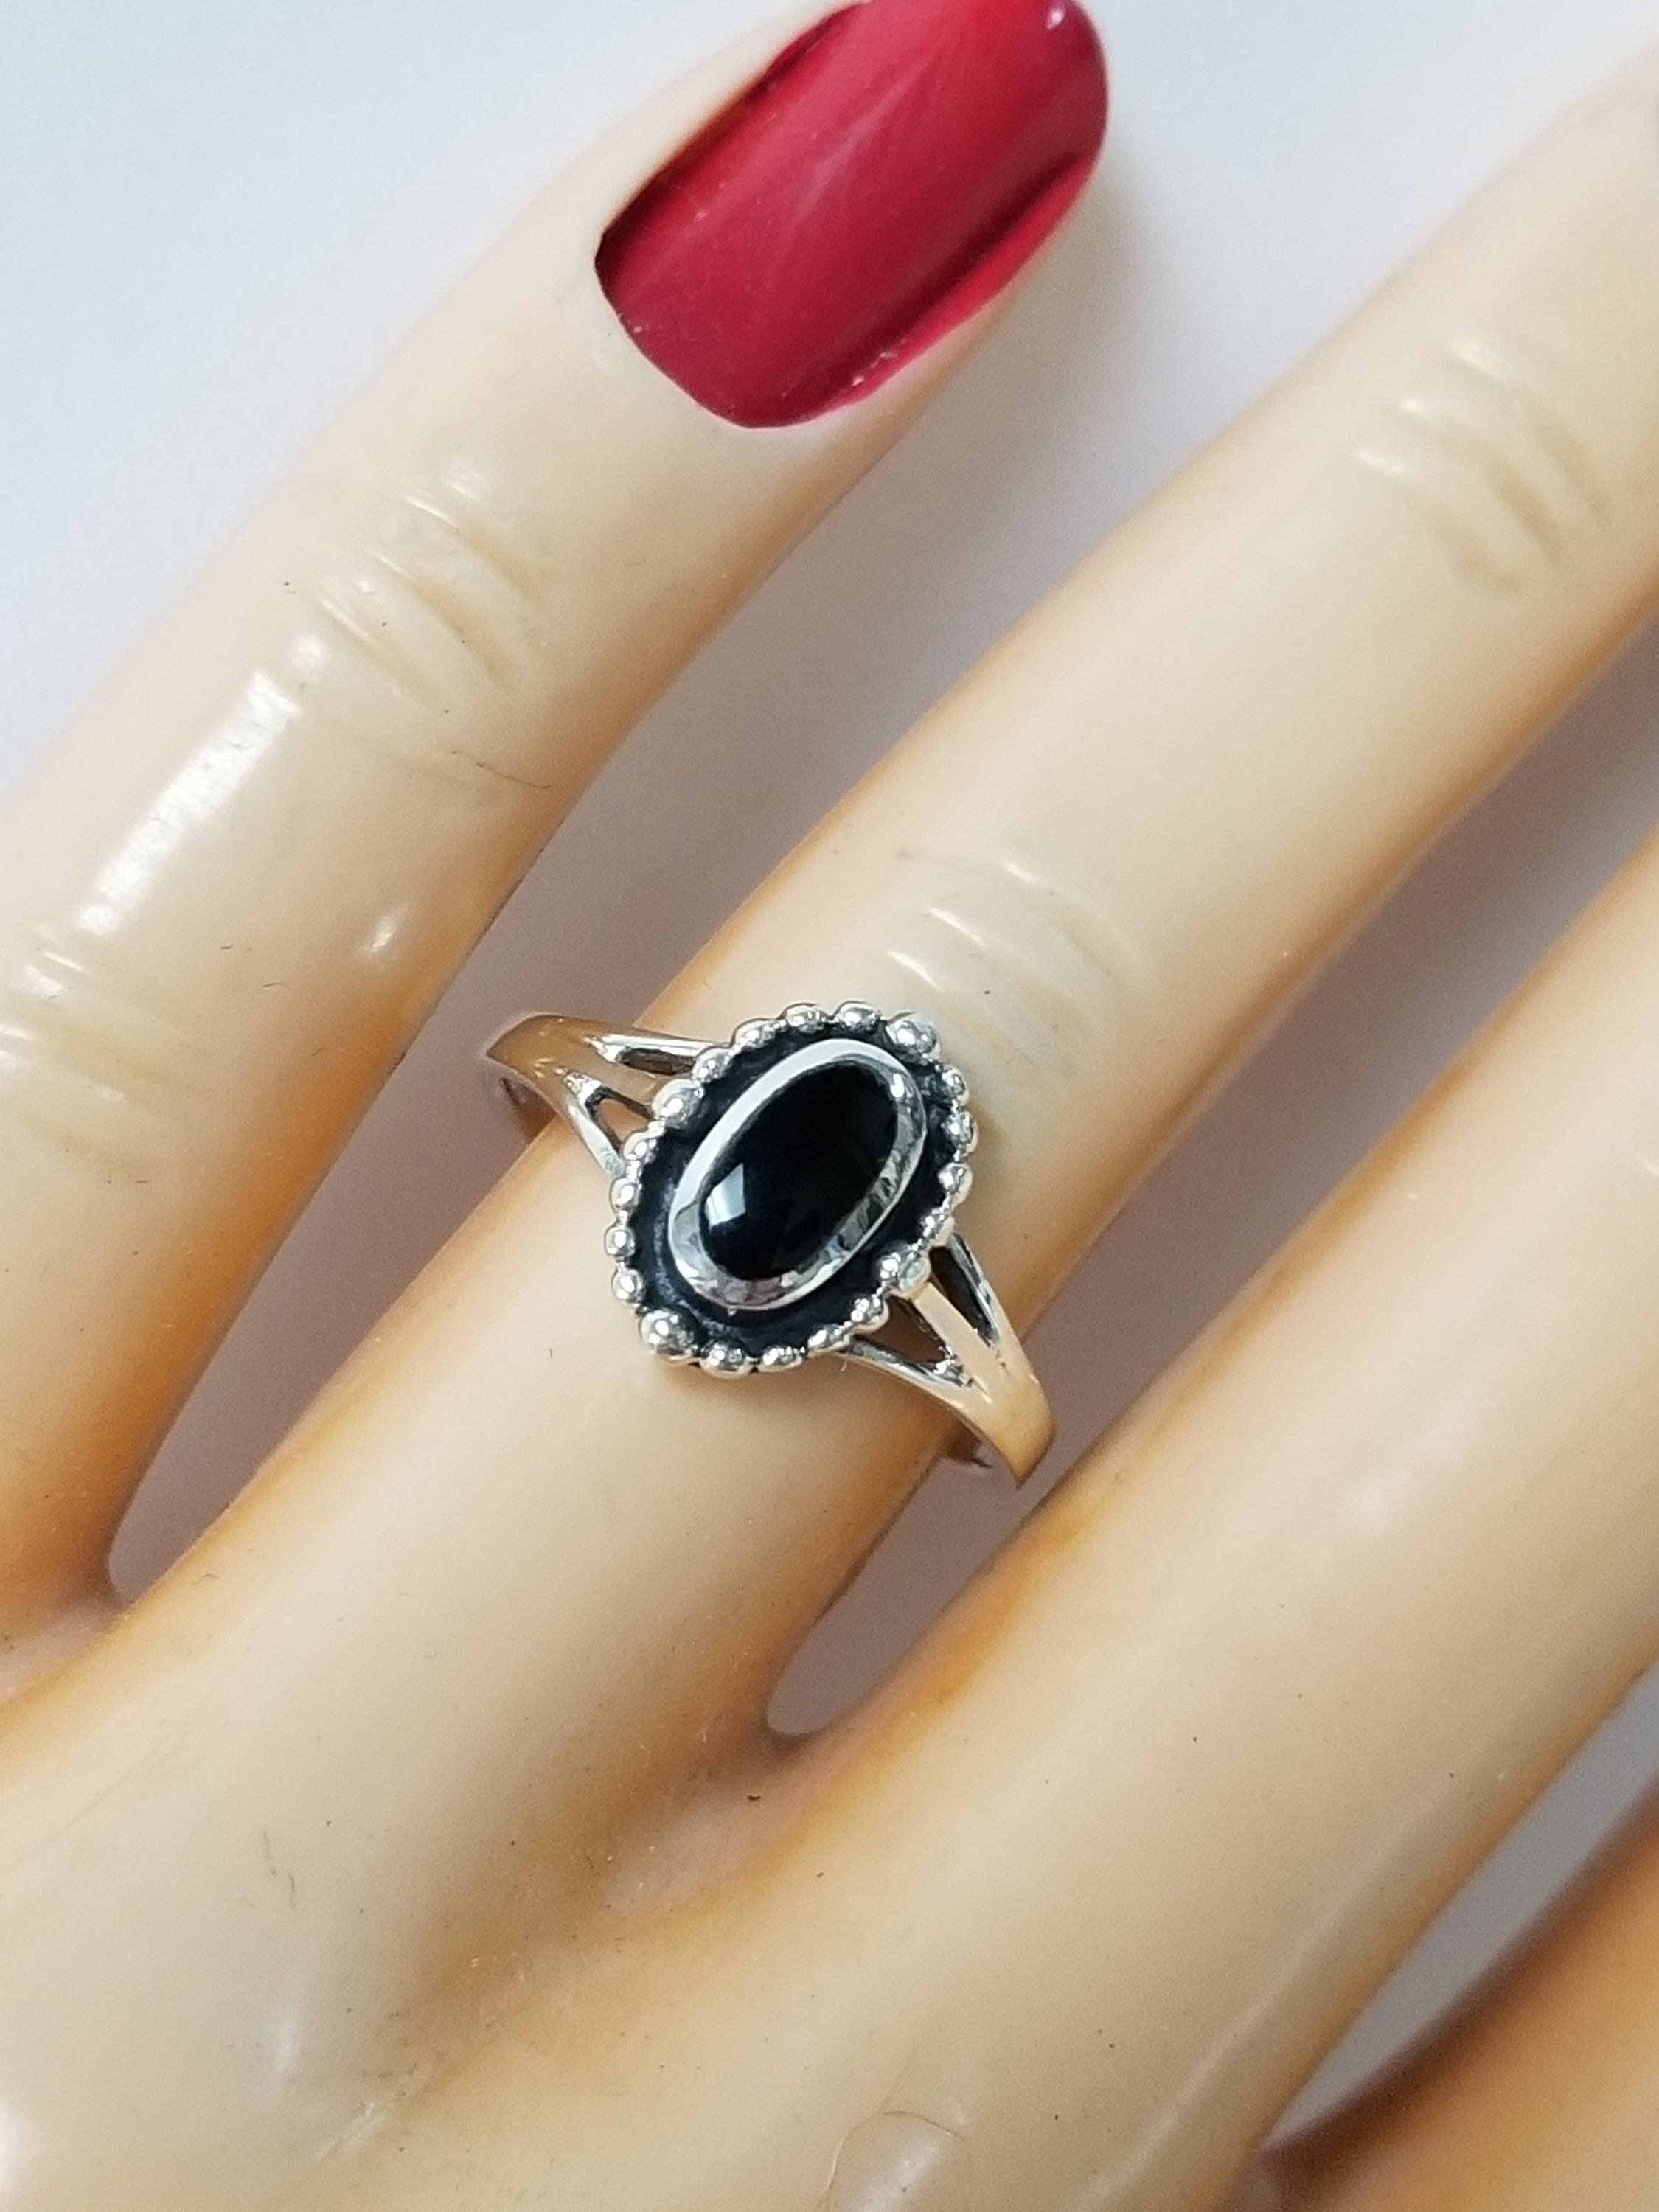 Black Onyx Ethnic Brass Handmade Jewelry Ring US Size 10 R-21248